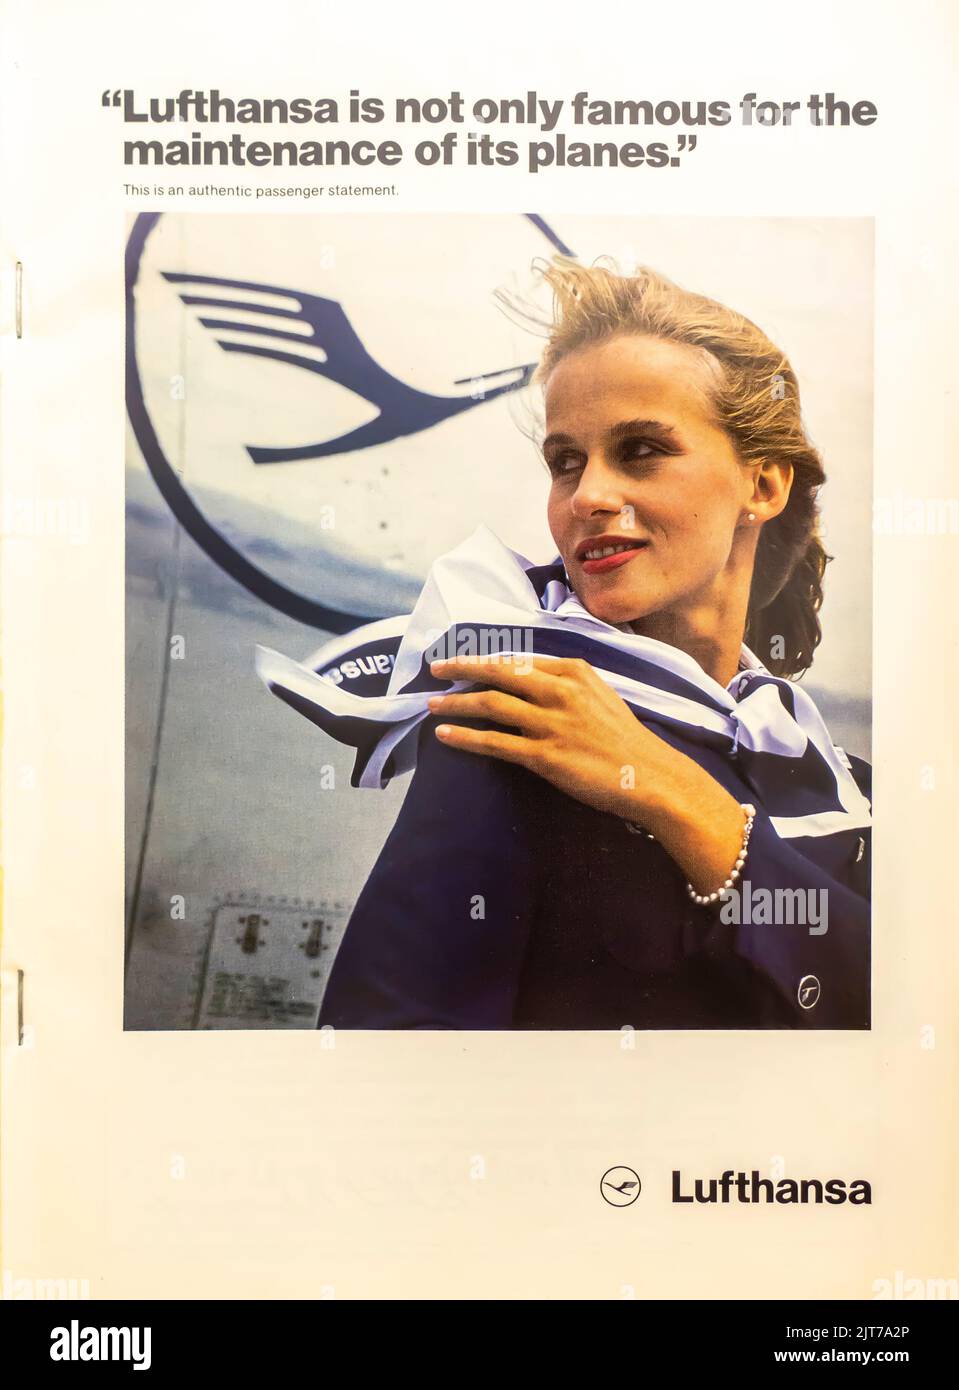 Lufthansa advertisement placed in a NatGeo magazine, August 1986 Stock Photo